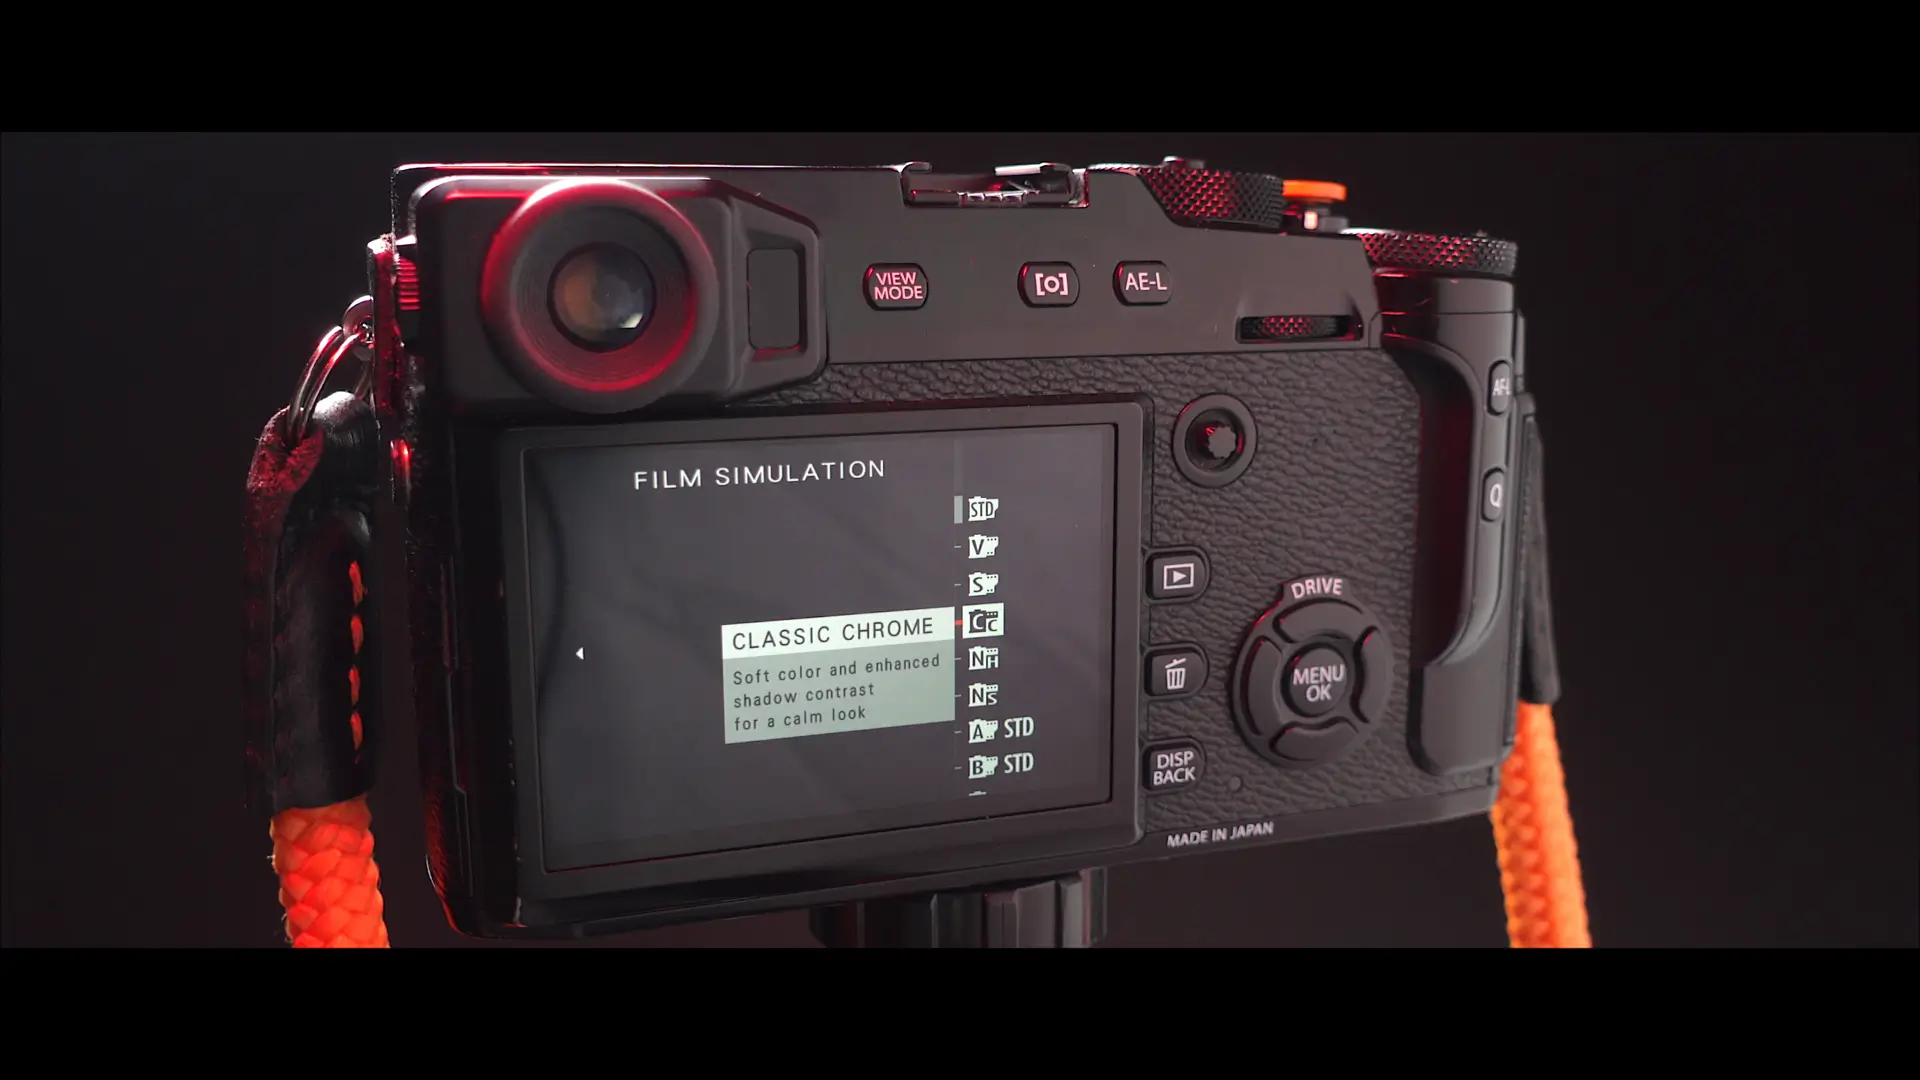 Fujifilm X-Pro2 Review